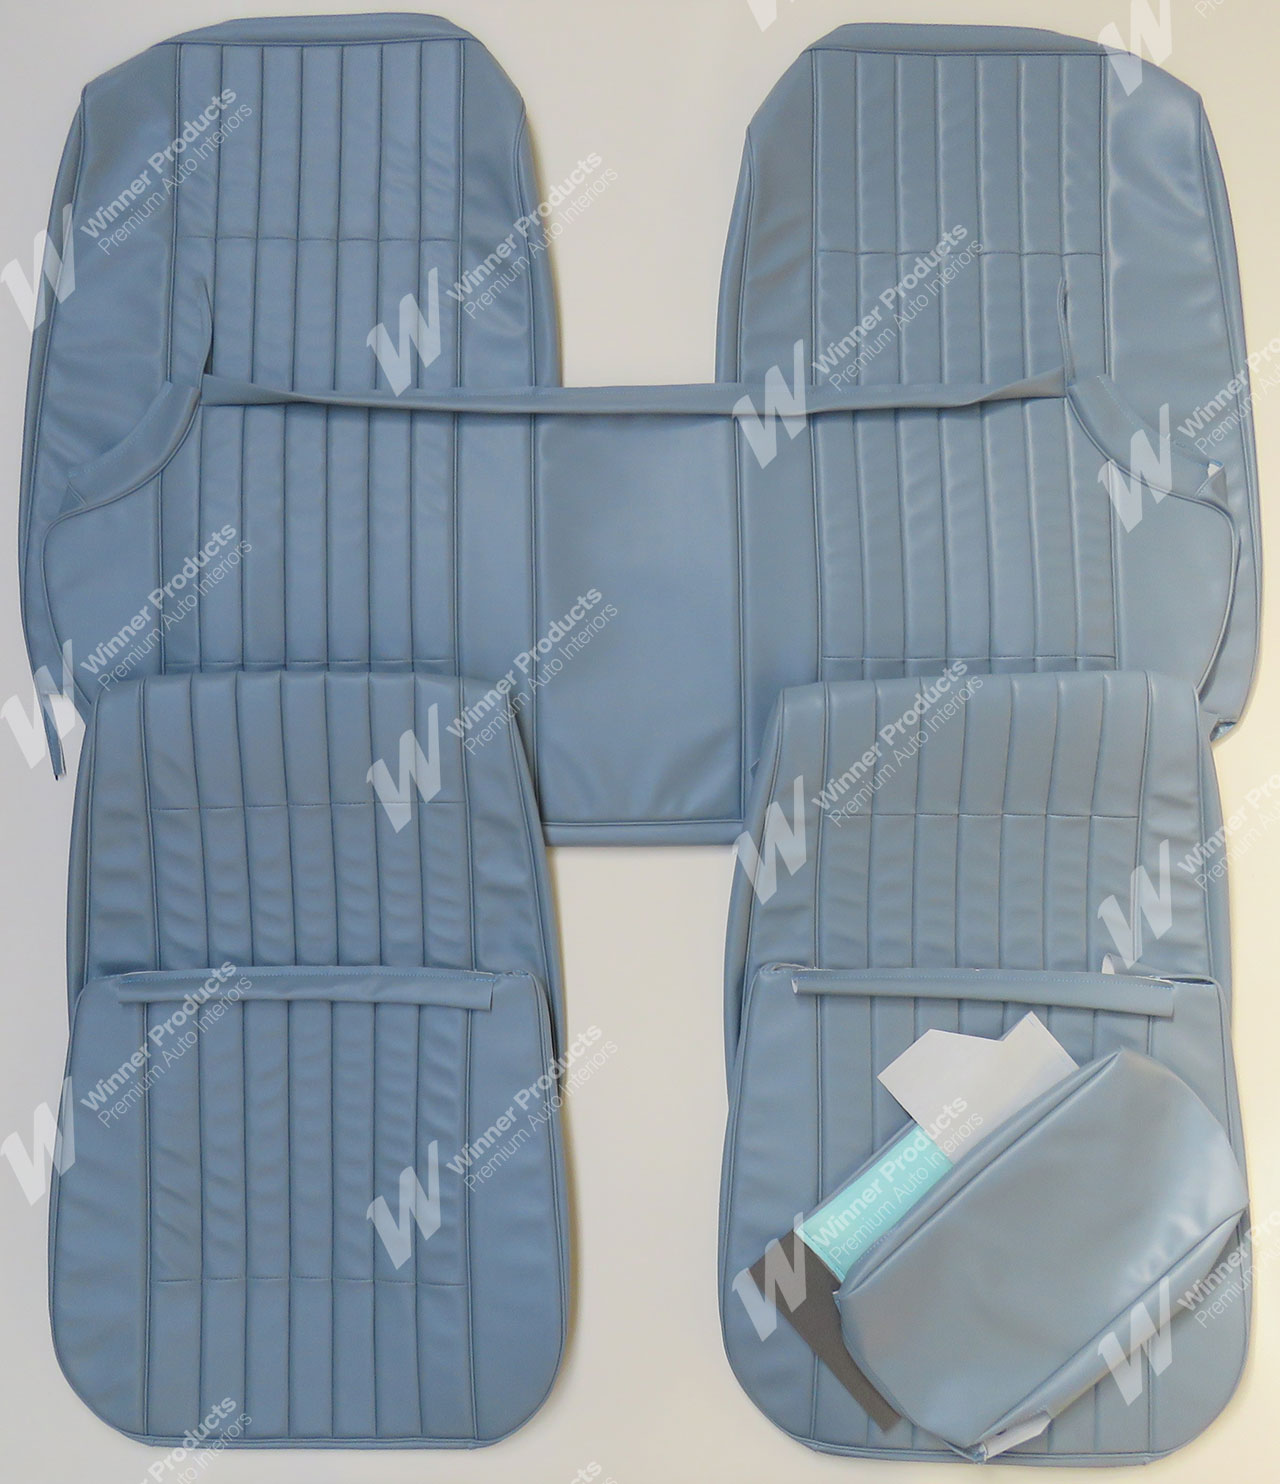 Holden Premier HK Premier Sedan 14R Light Teal Seat Covers (Image 1 of 7)